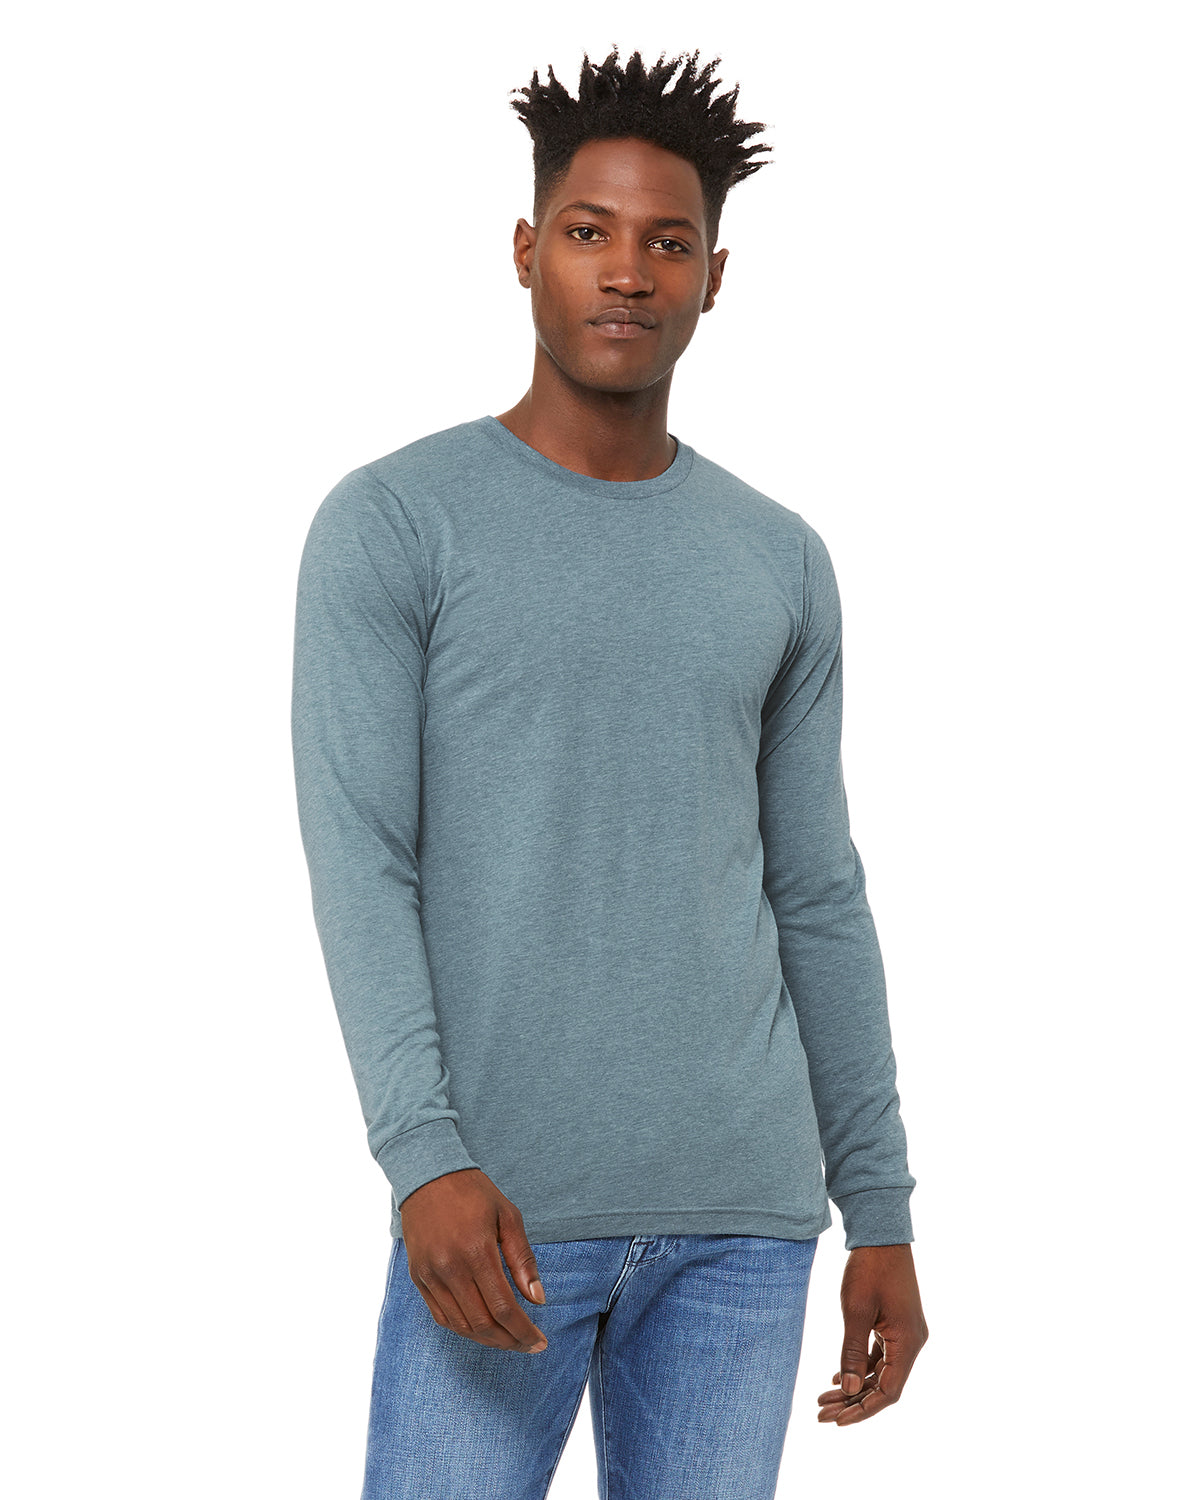 WB221 Unisex Premium Long Sleeve T-Shirt Design by Wyatt